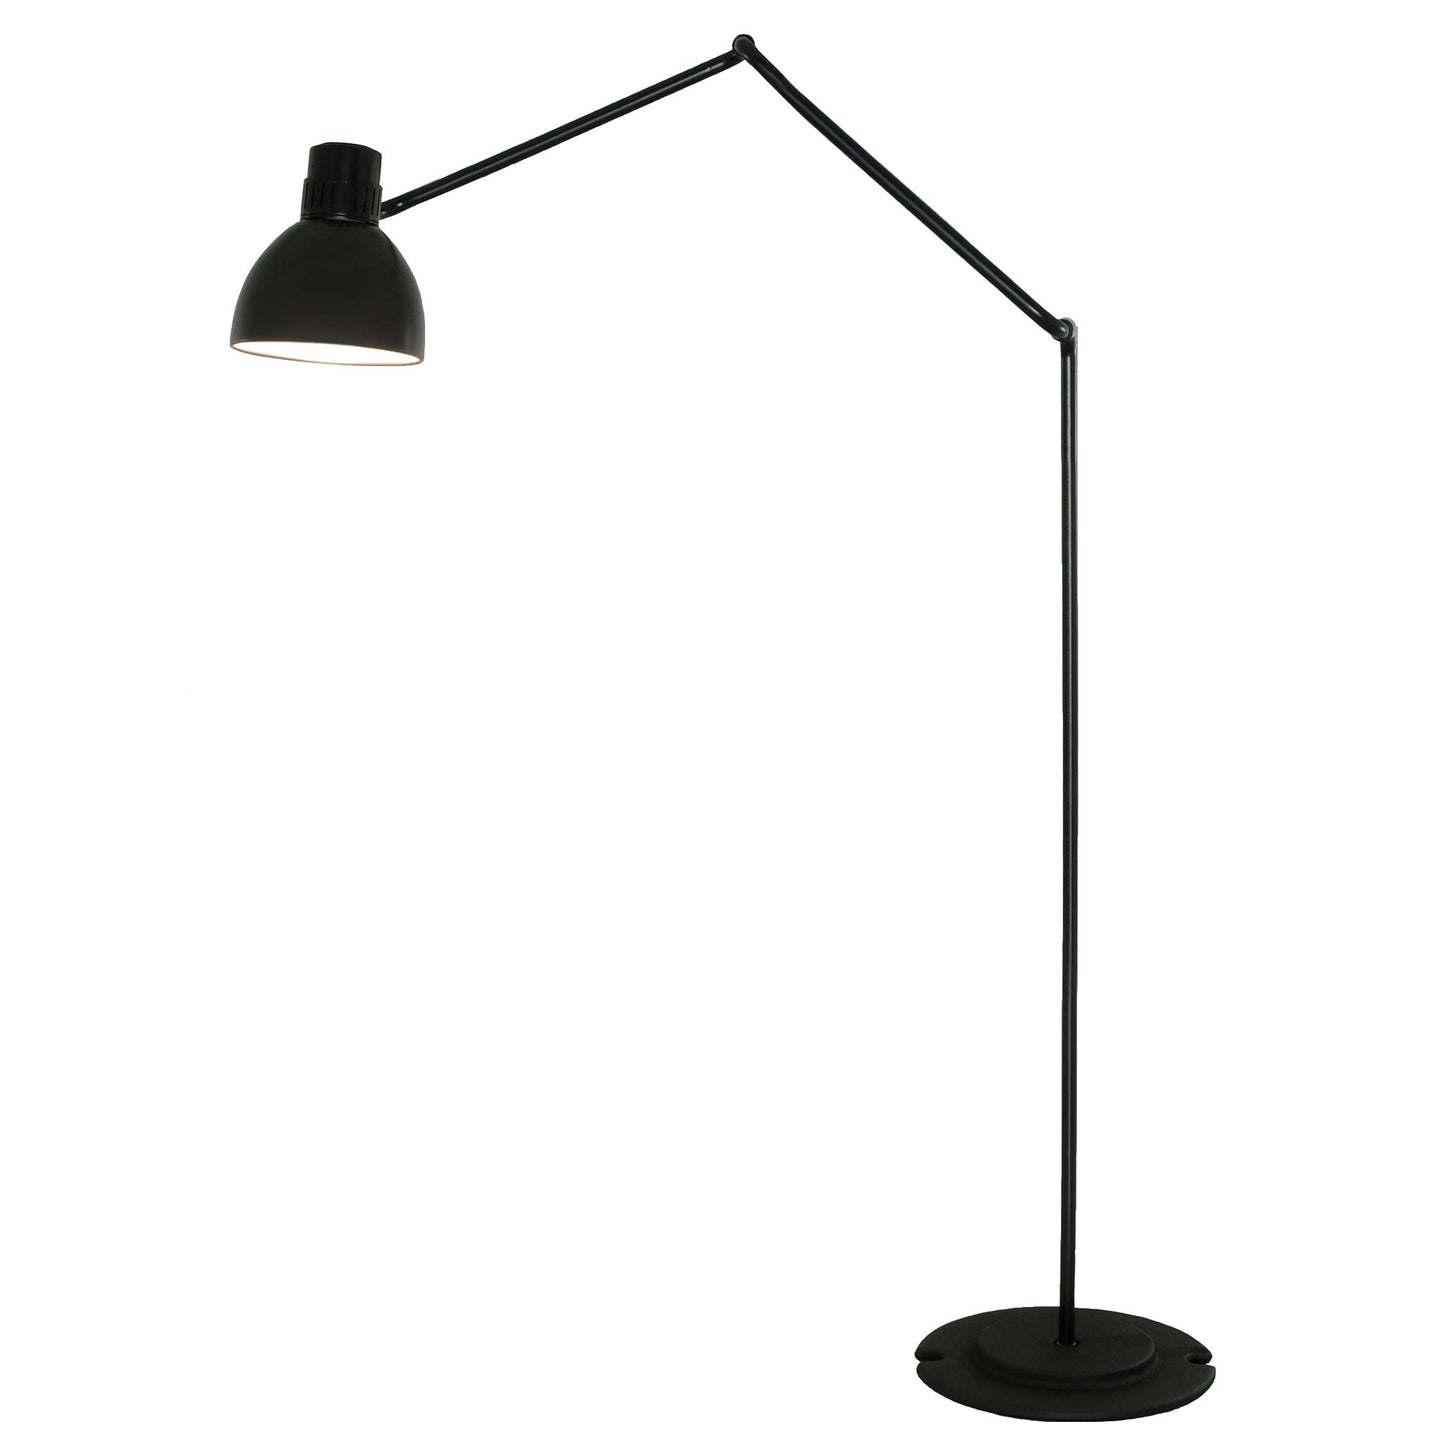 B.Lux System F50 Floor Lamp